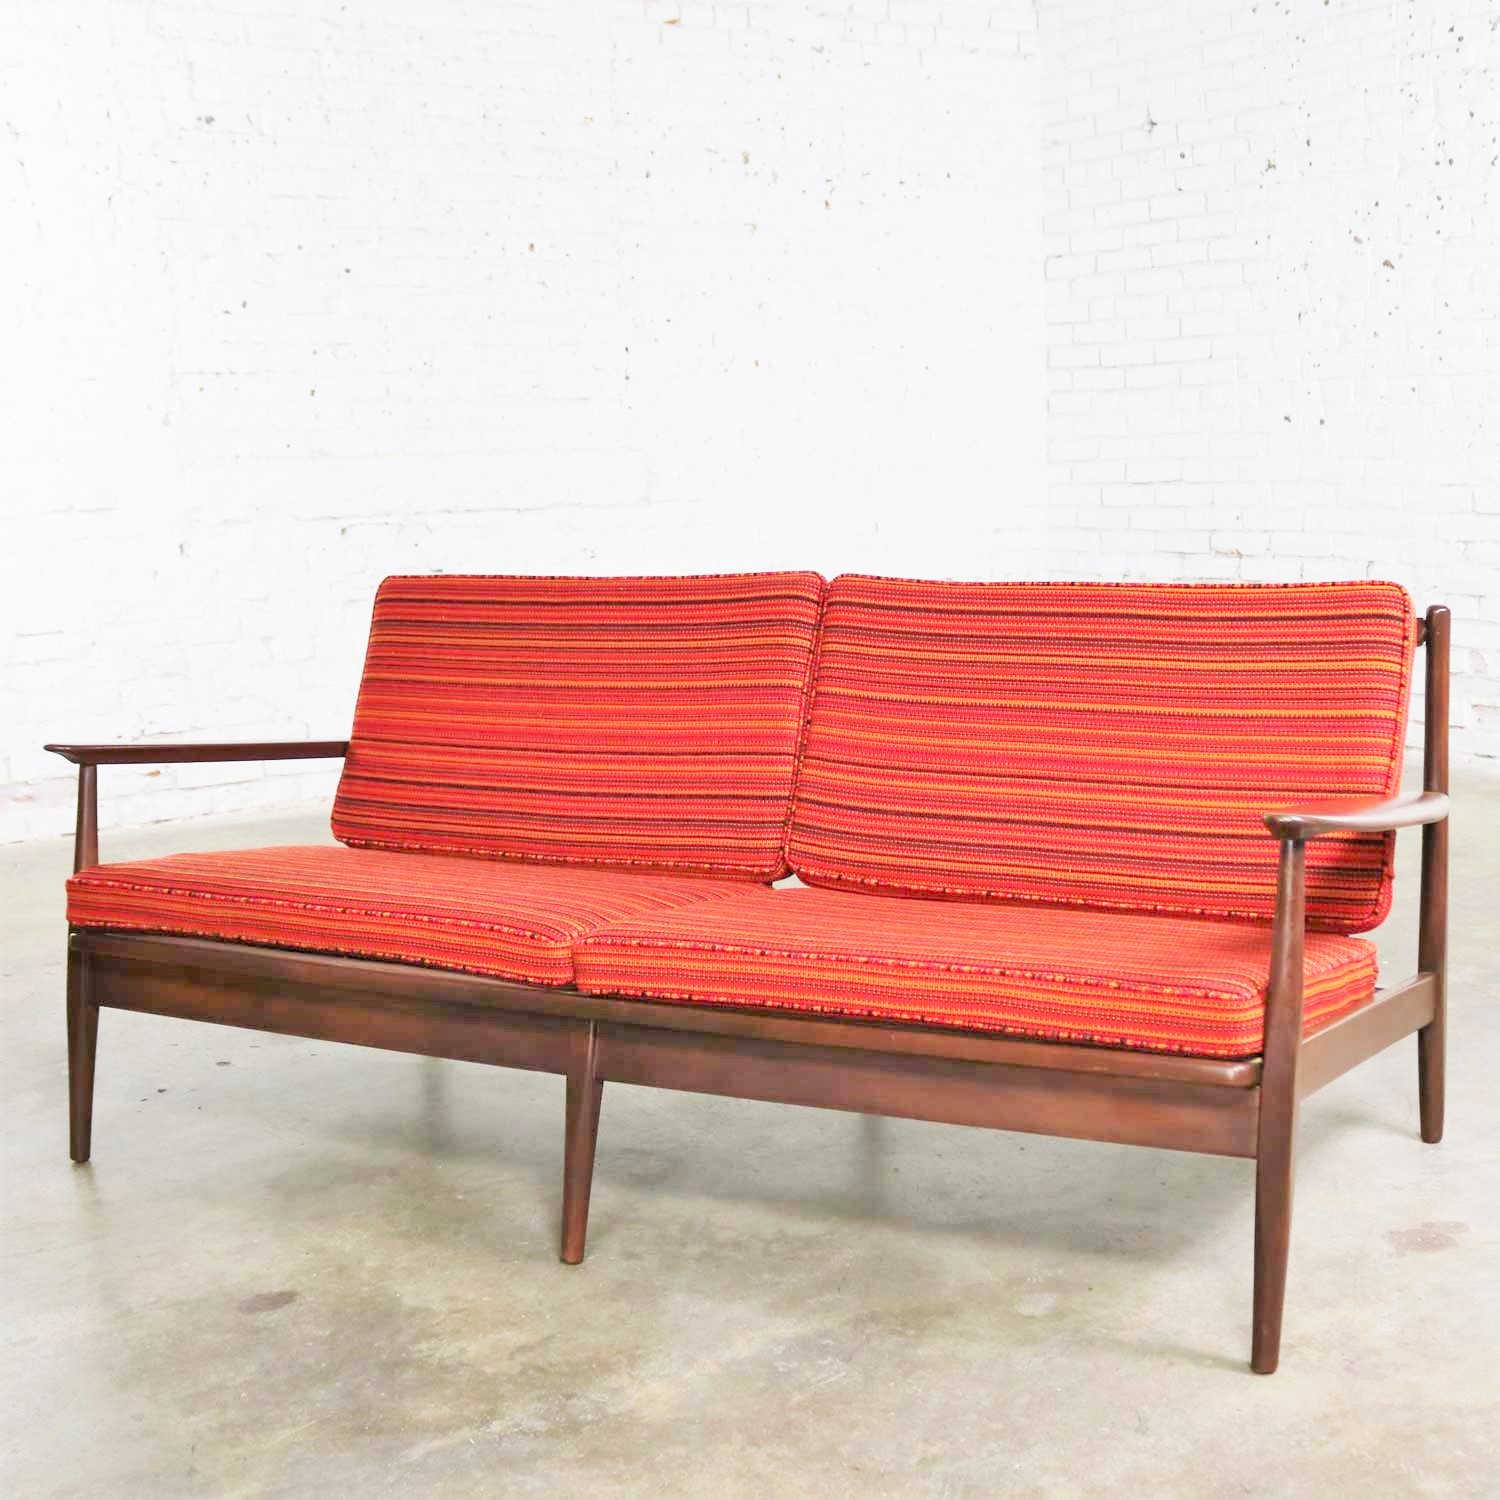 Vintage Danish or Scandinavian Modern Loose Cushion Sofa New Red Stripe Upholstery